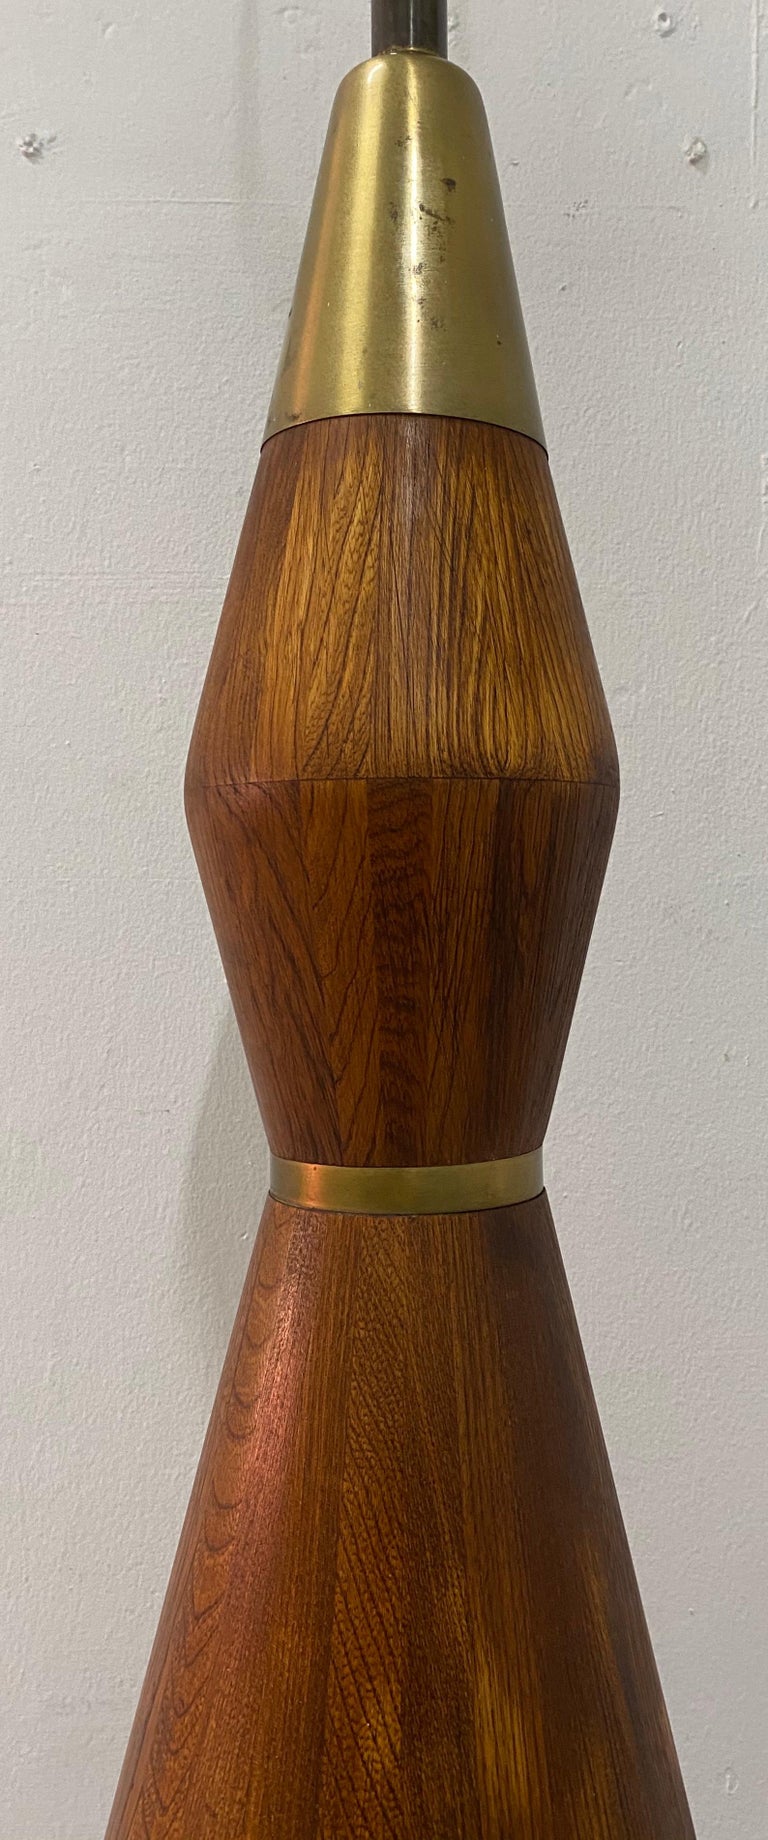 American Mid-Century Modern Walnut Table Lamp, circa 1960 For Sale